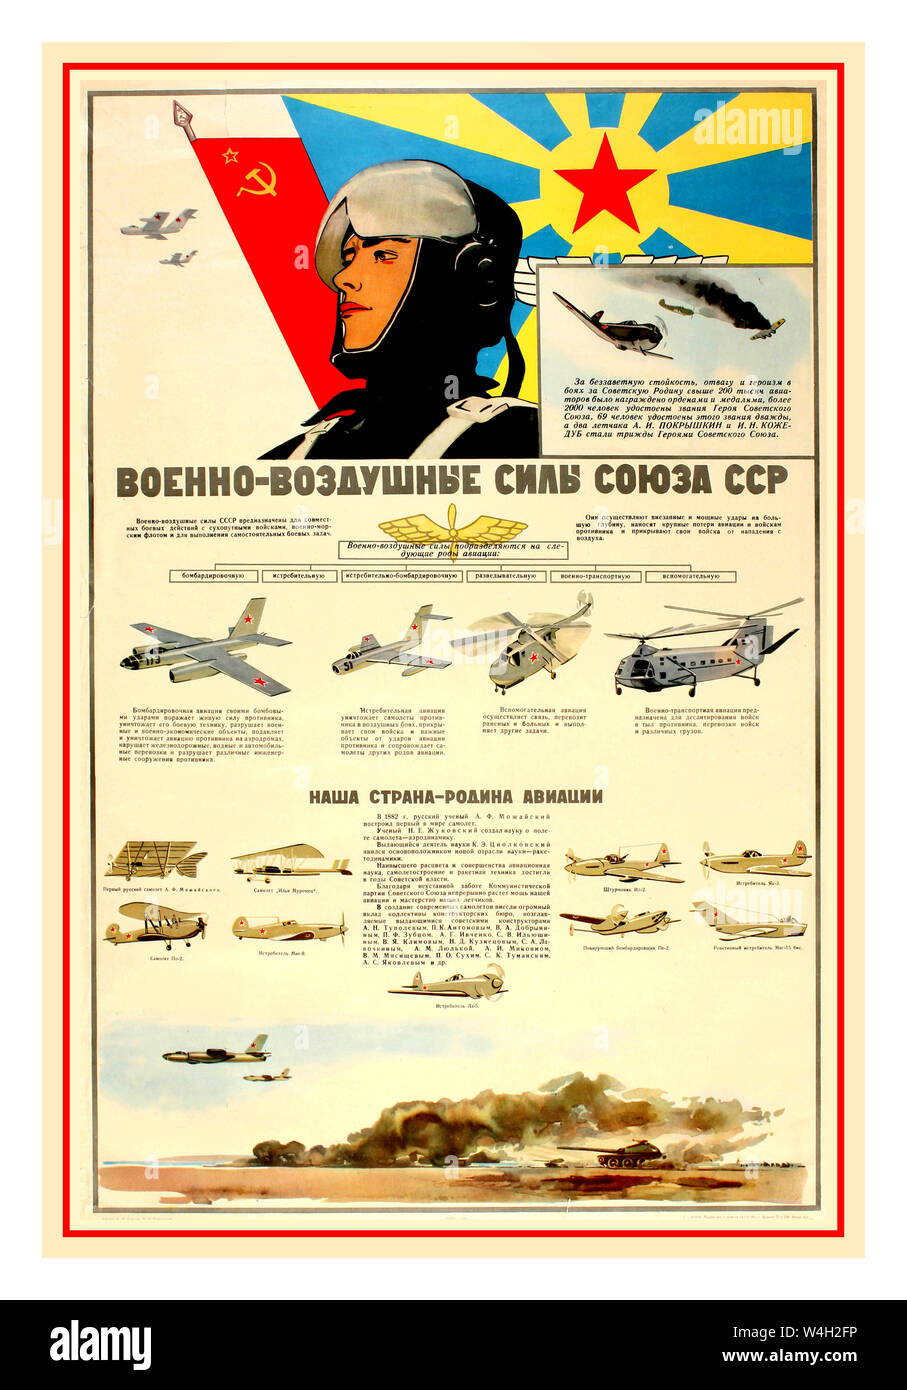 Original vintage 1961 Ukraine USSR propaganda poster - Air Force of the  Soviet Union - featuring pilot in front of the Soviet Air Force and hammer  and sickle flags above various models